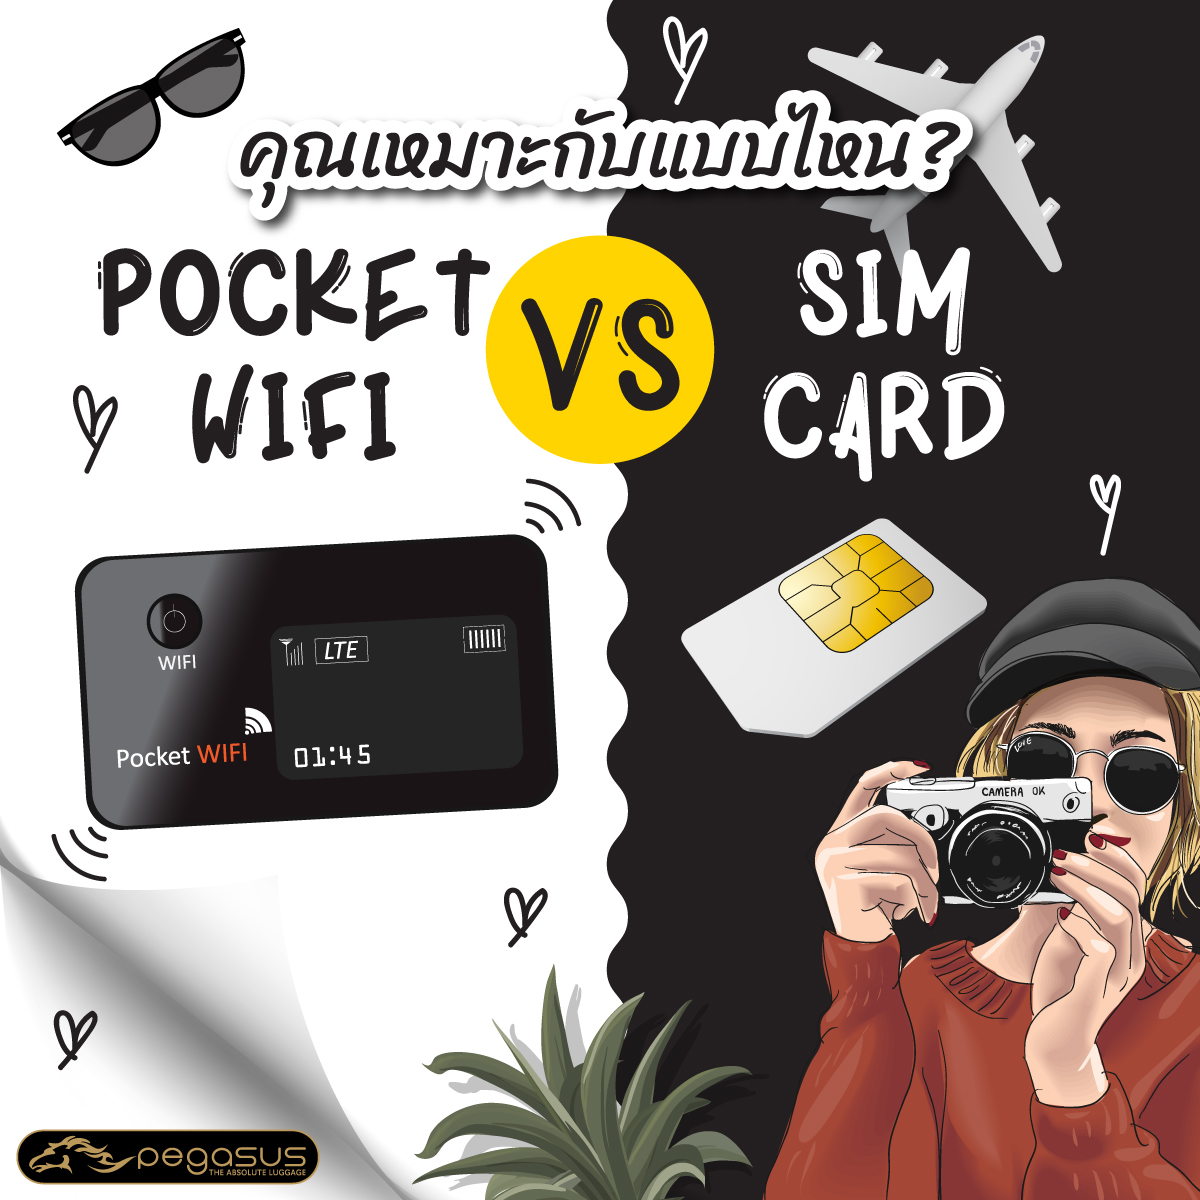 Pocket wifi VS Sim card